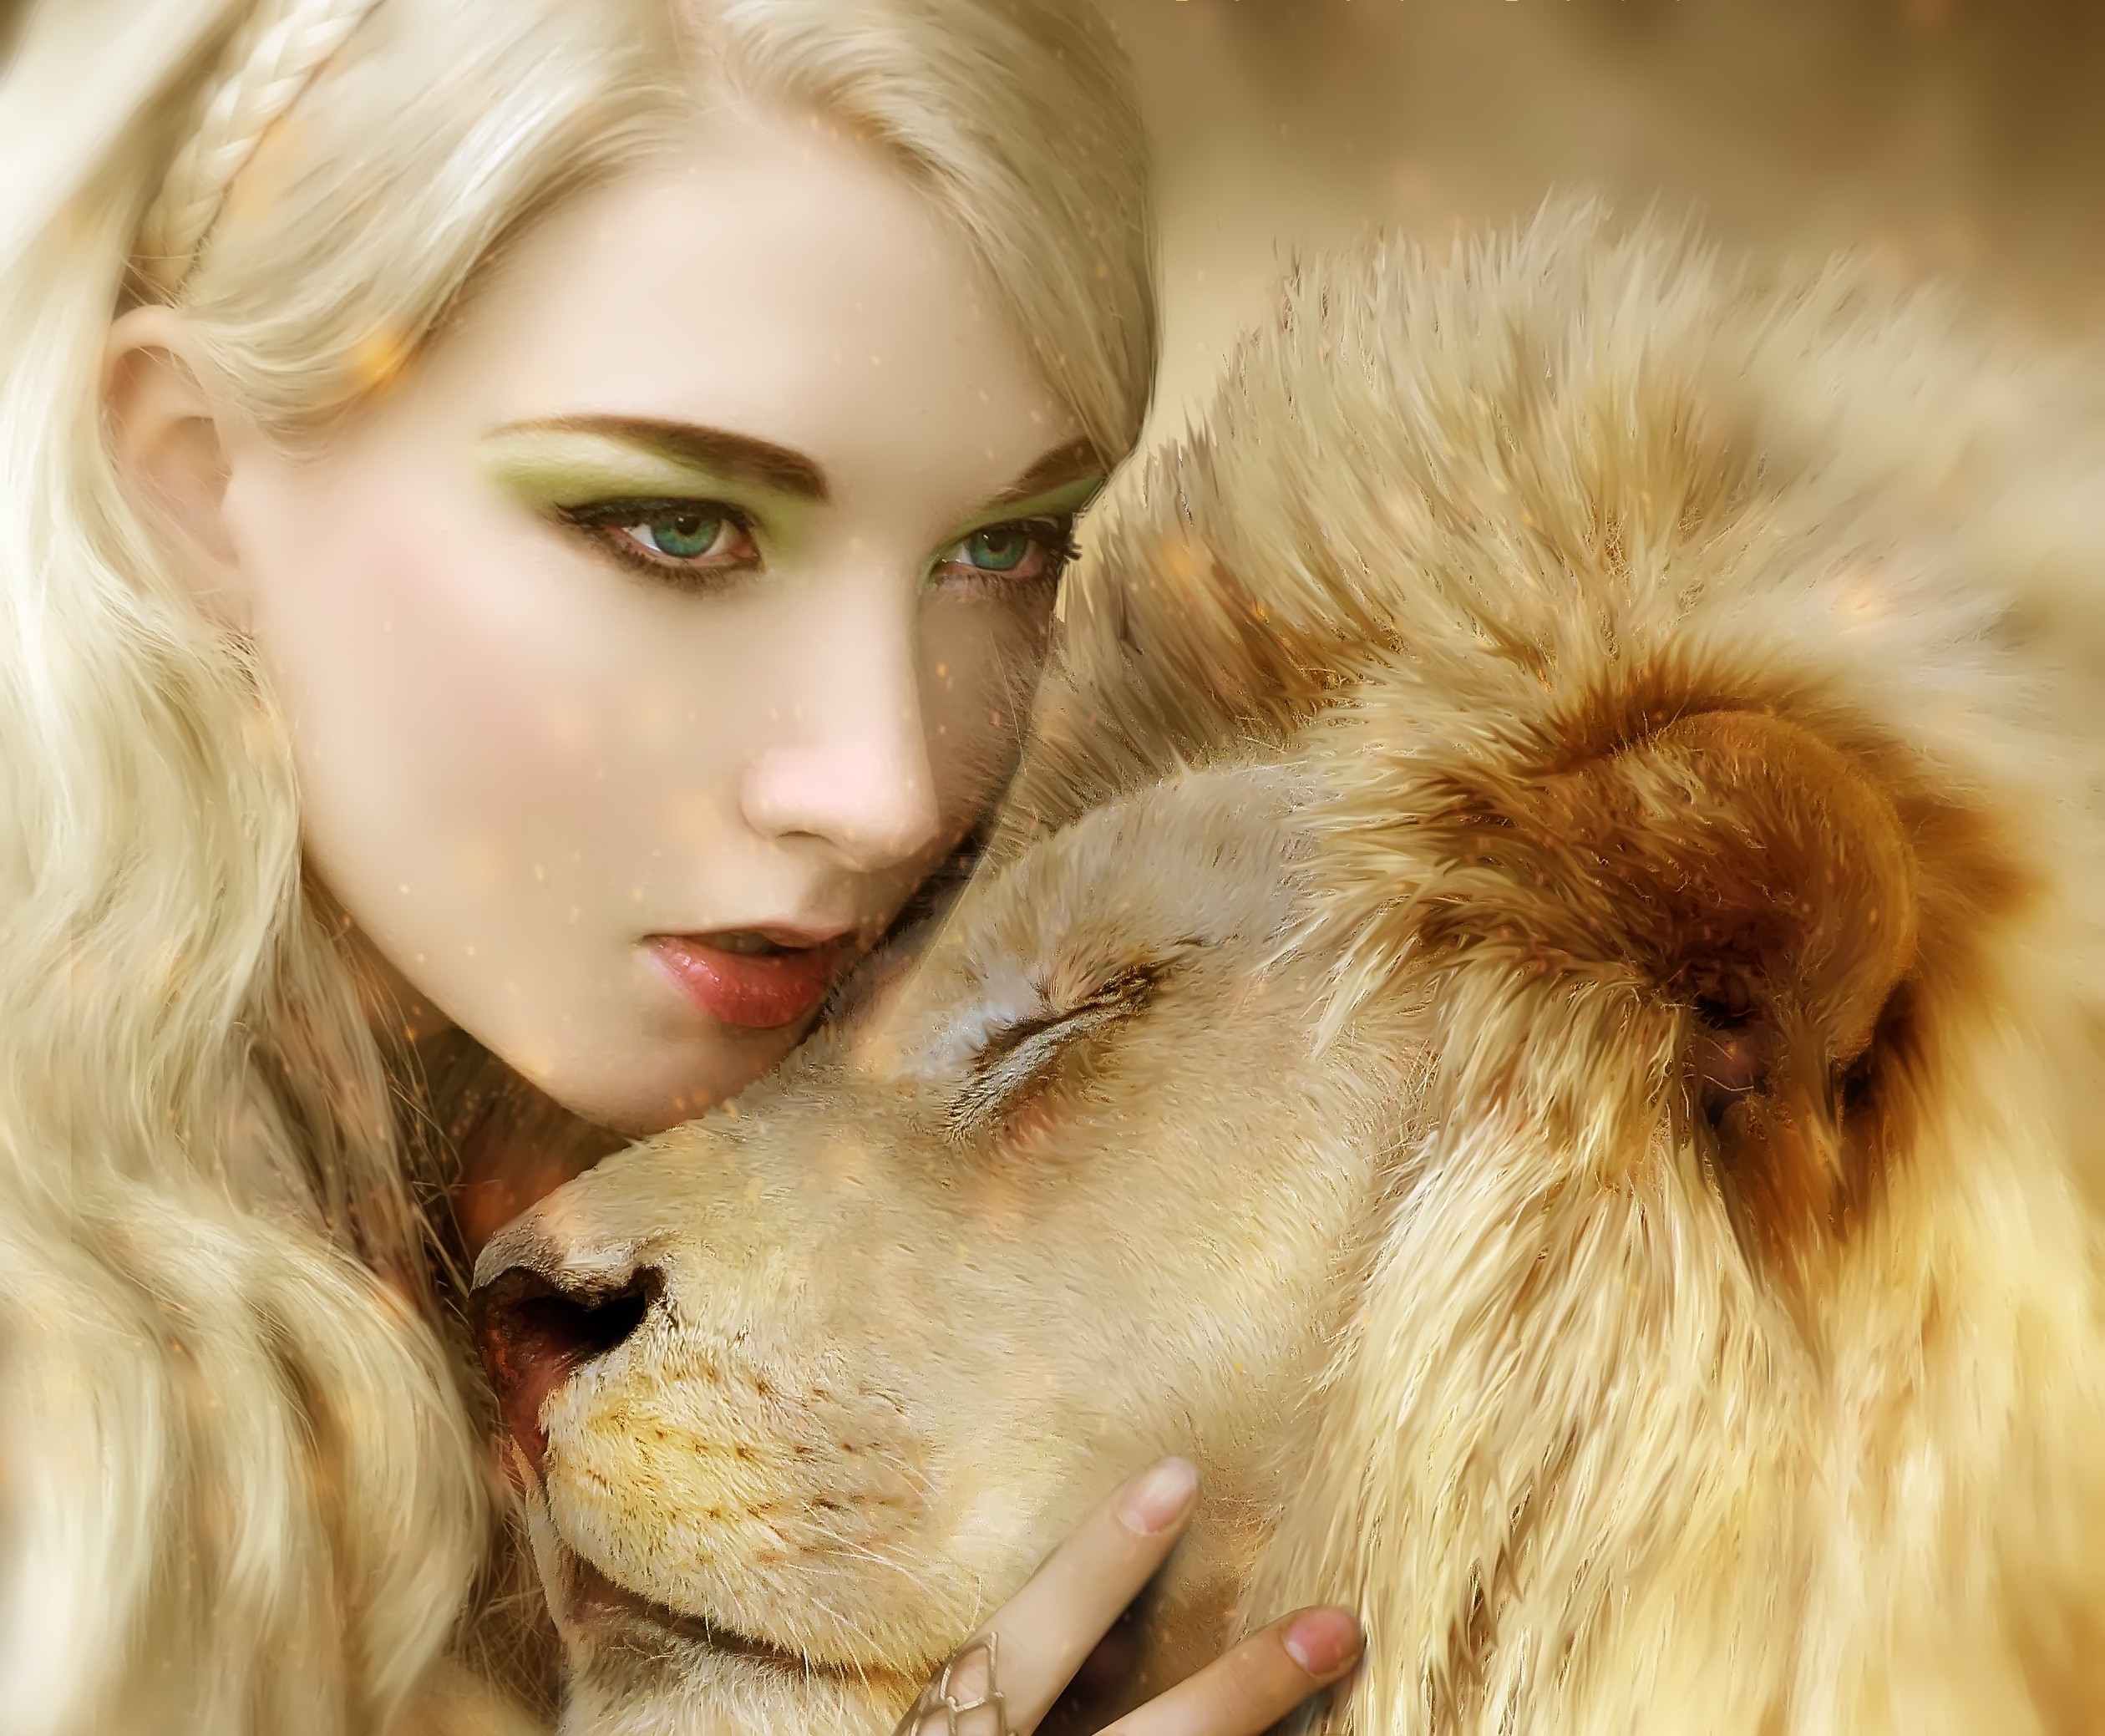 Мужчин лев женщина форум. Девушка и Лев. Девушка львица. Львица красивая женщина. Девушка обнимает Льва.